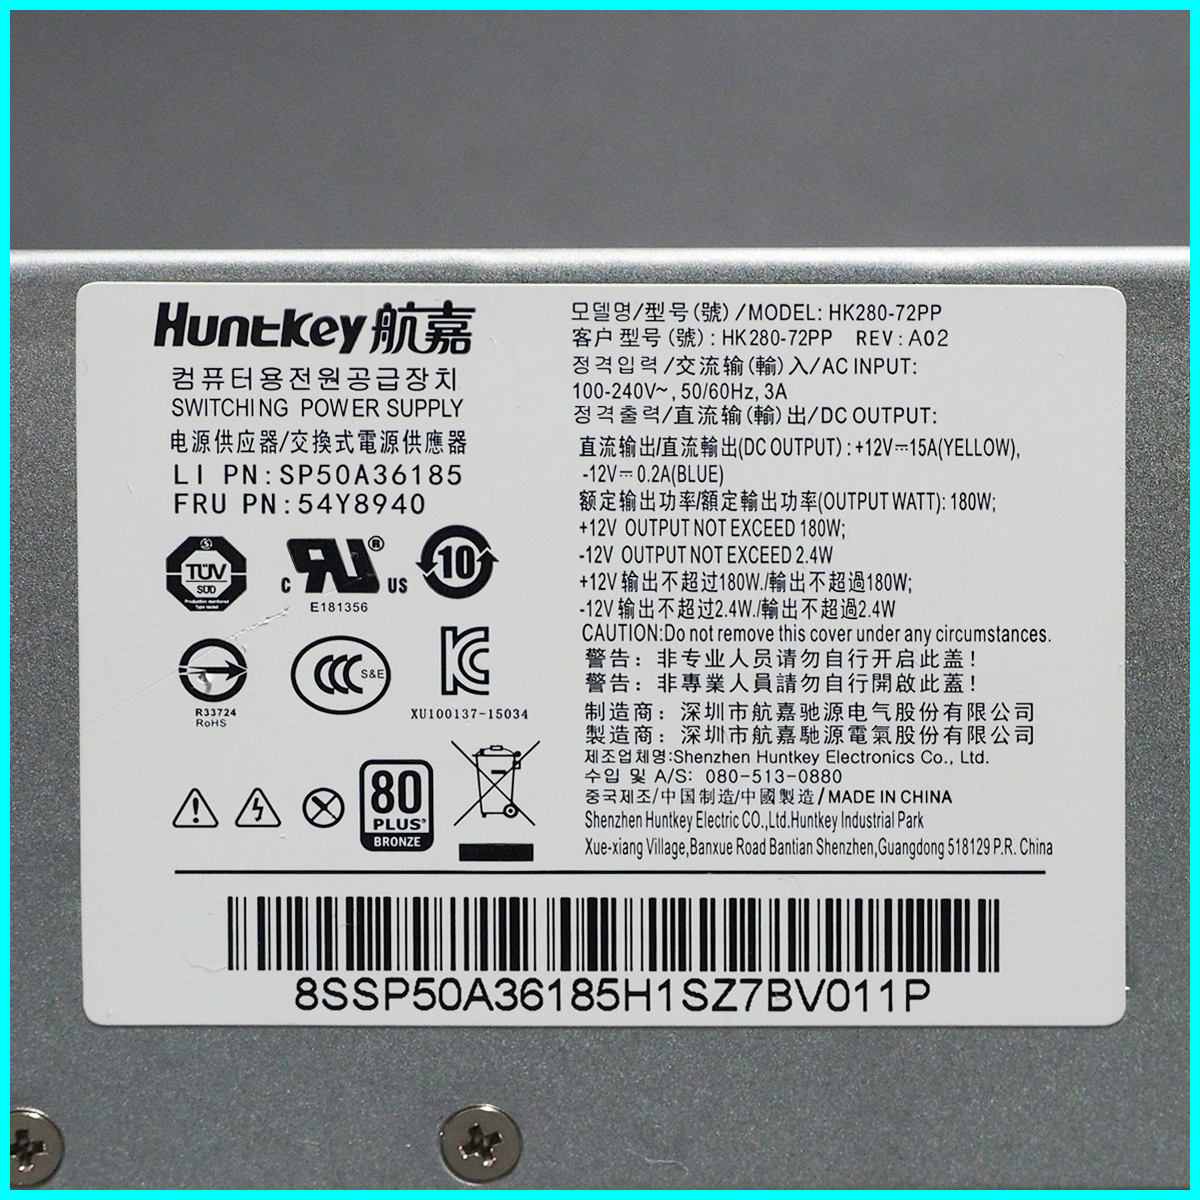 NEC Mate MJ27ML-U power supply Huntkey HK280-72PP LI PN:SP50A36185 FRU PN:54Y8940 180W 80PLUS BRONZE